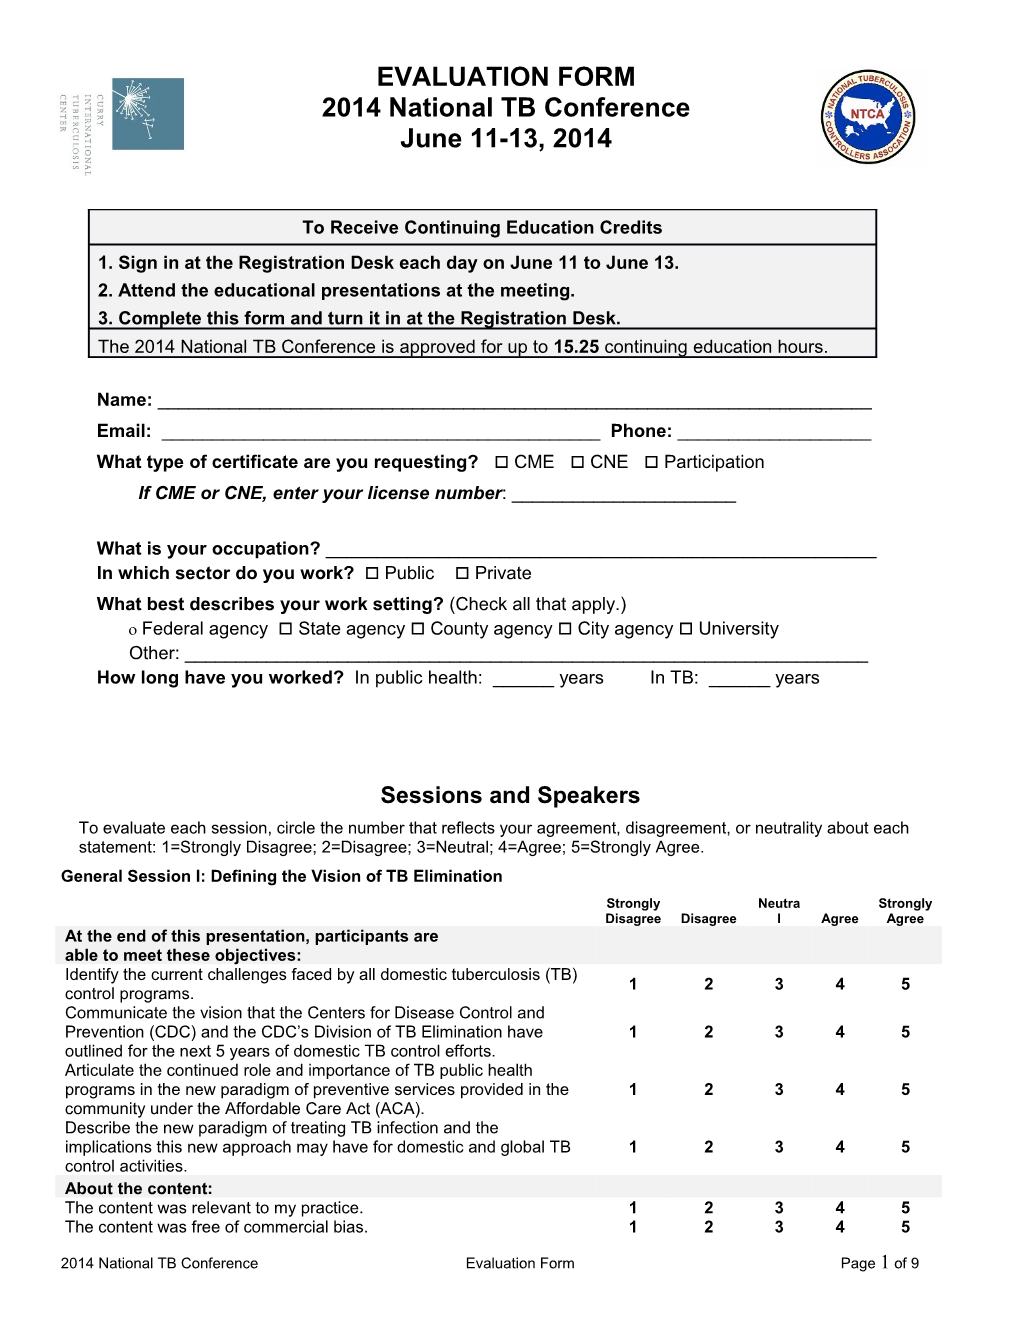 Evaluation Form s1